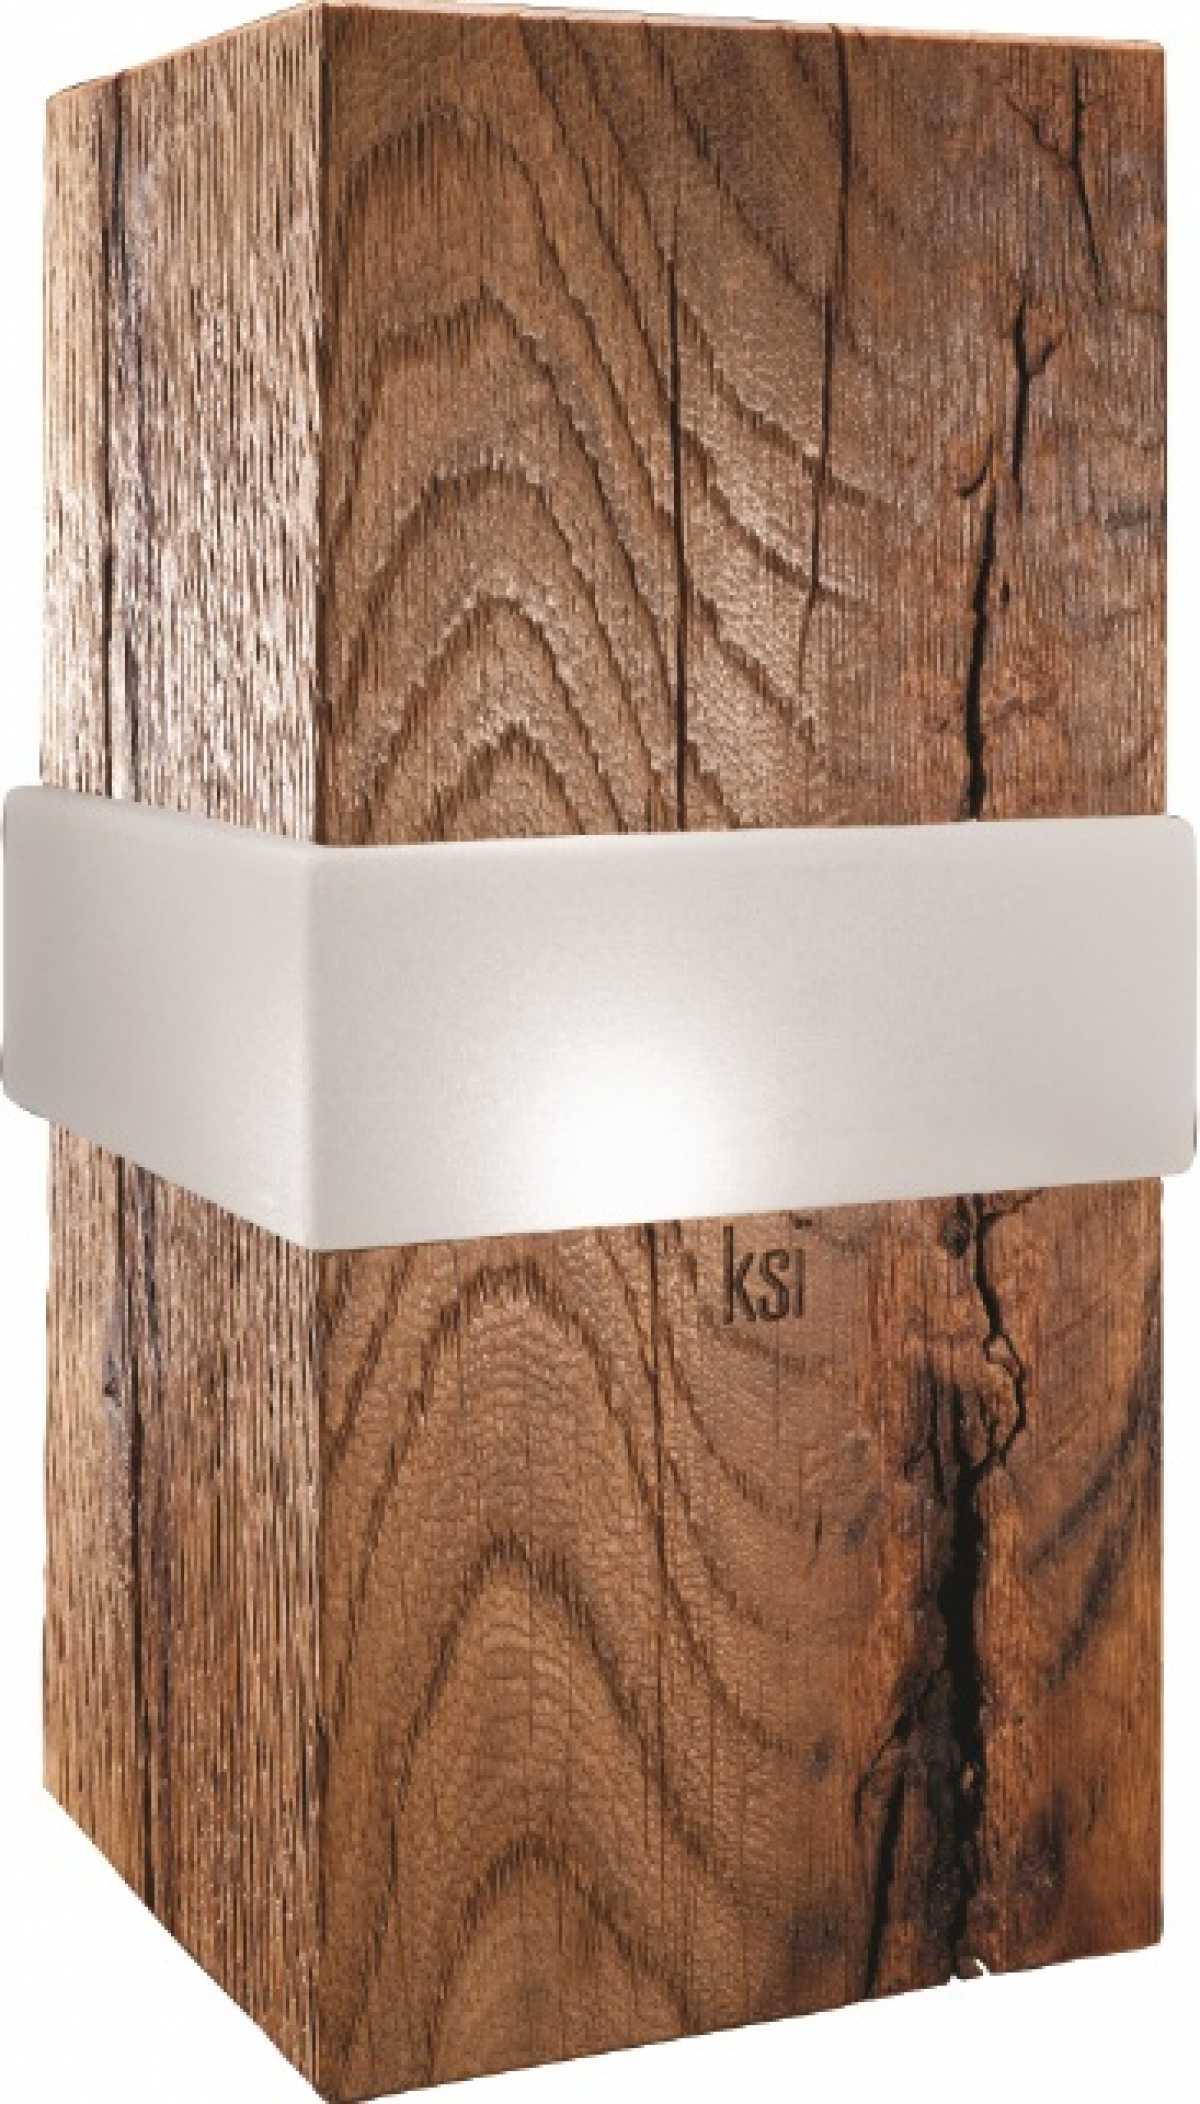 KSI X1 Modern Old Oak Table Lamp